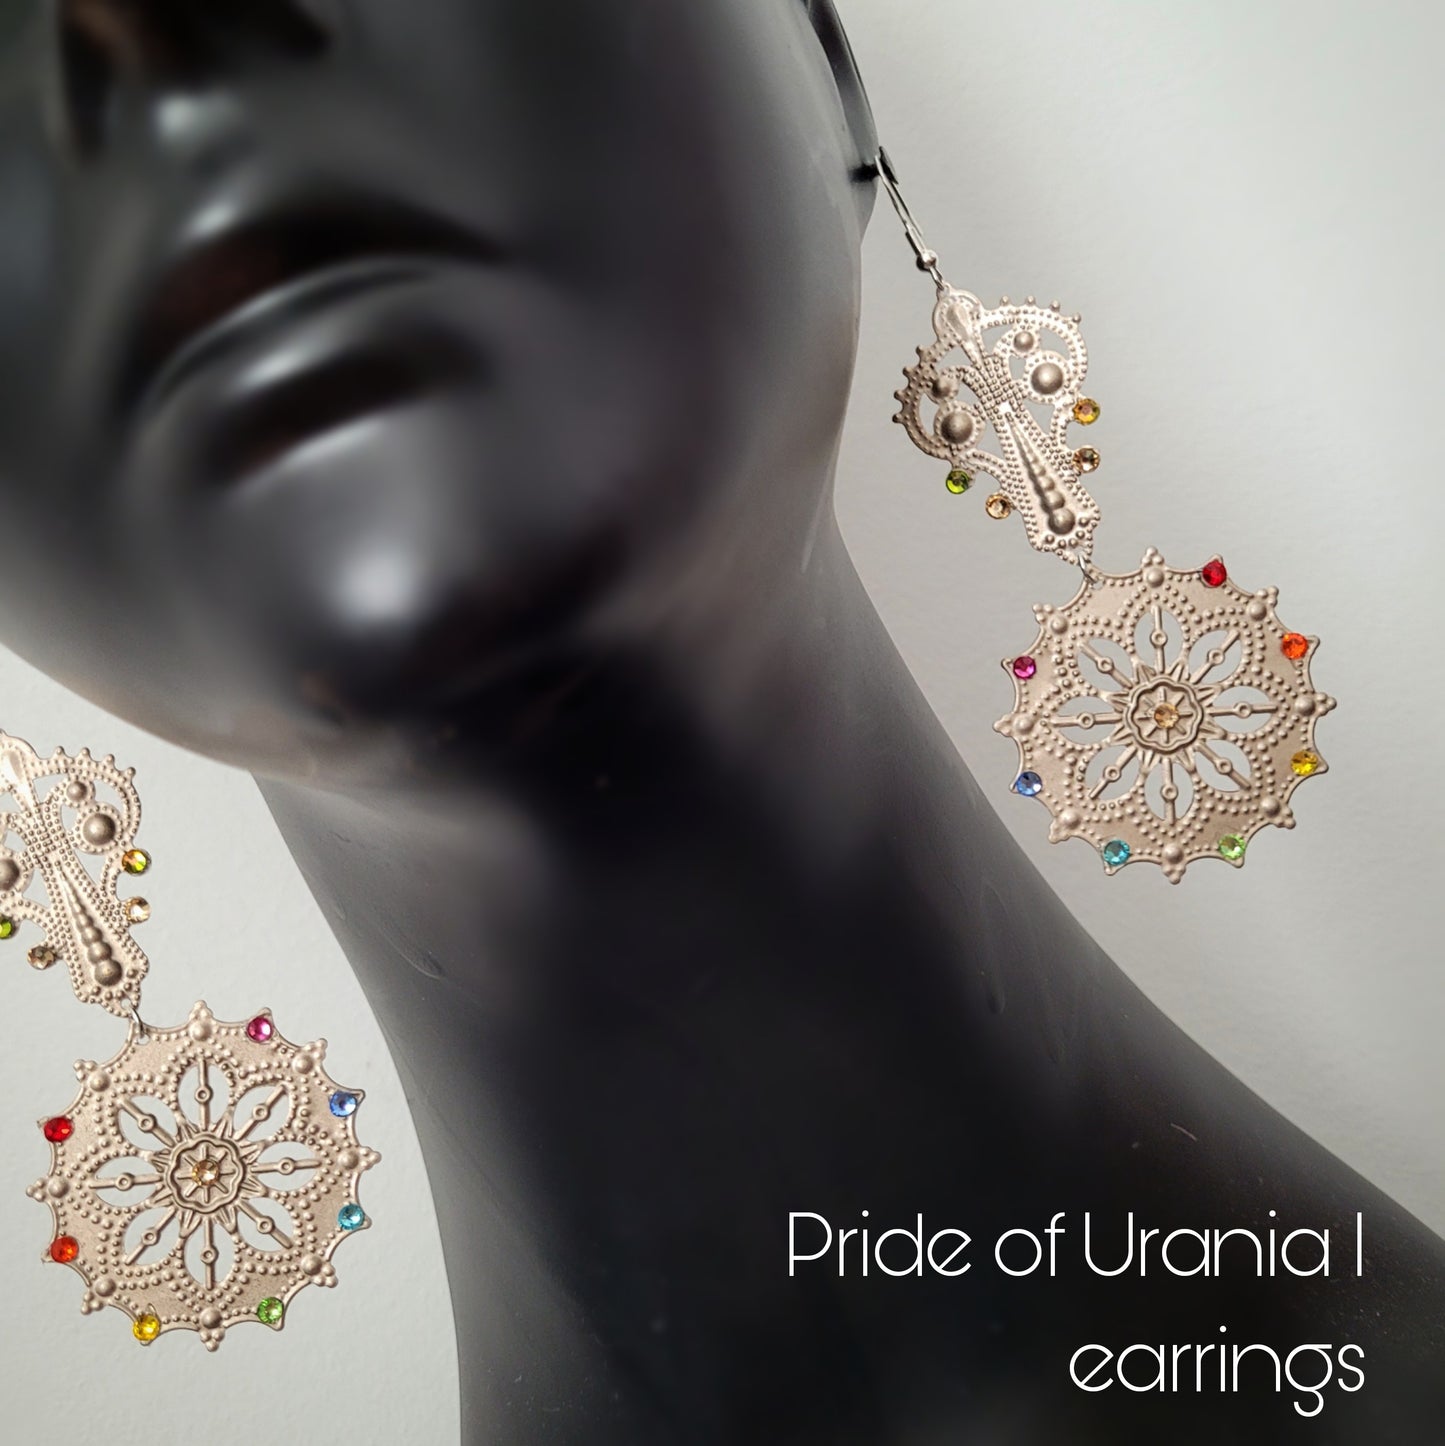 Deusa ex Machina collection: The Pride of Urania earrings